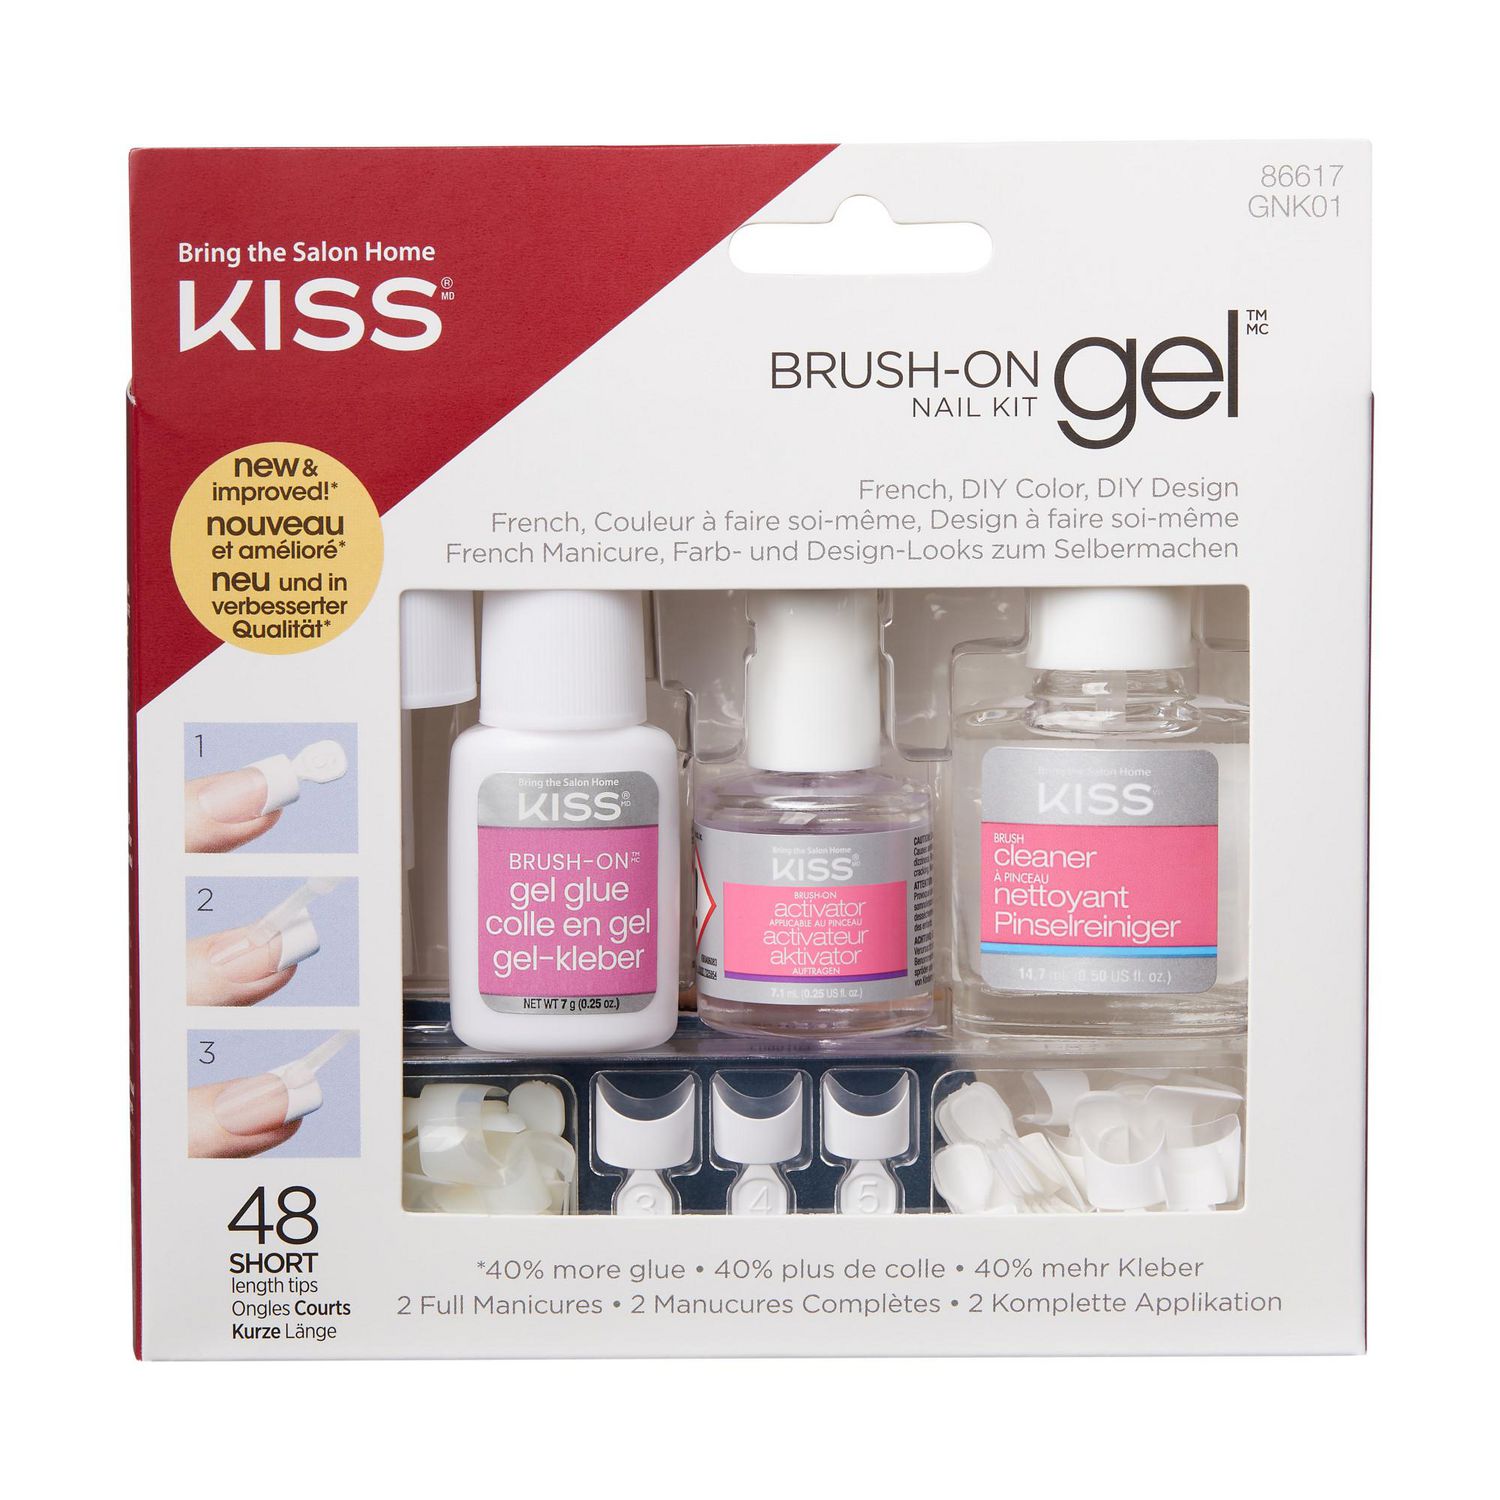 Kiss Brush-on Gel Nail Kit with 48 Short Length Tips 40% more Glue French  DIY | eBay